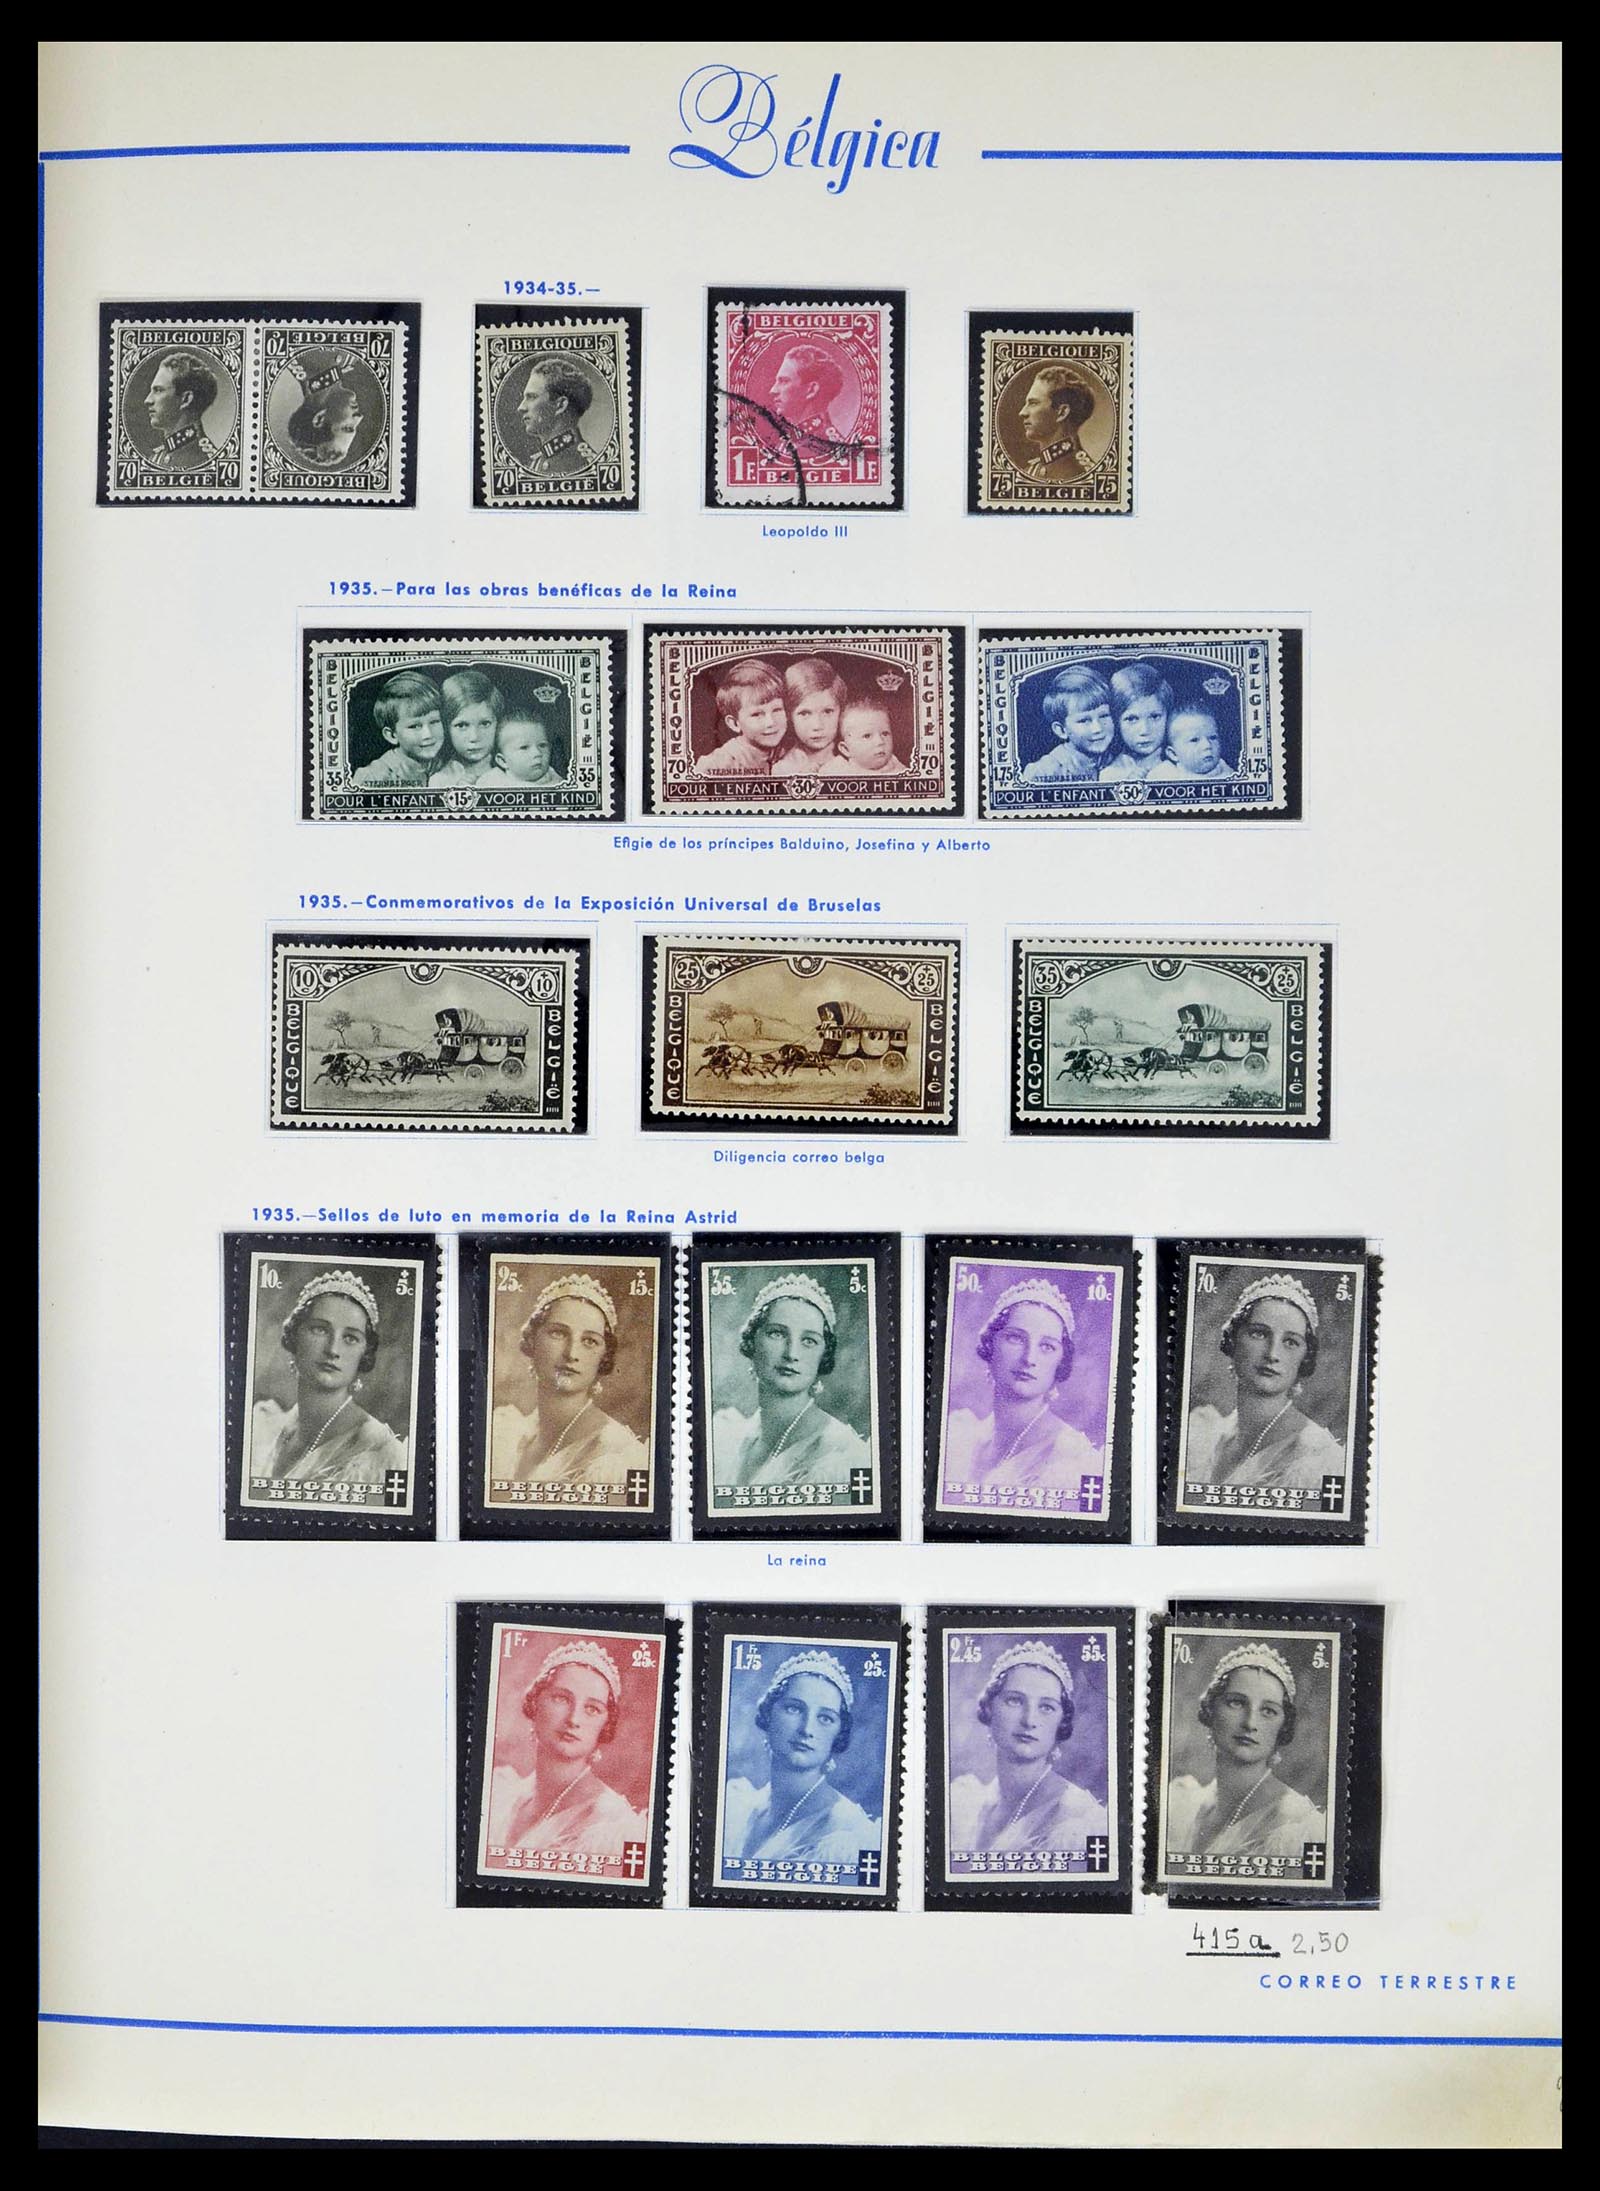 39230 0027 - Stamp collection 39230 Belgium 1849-1976.